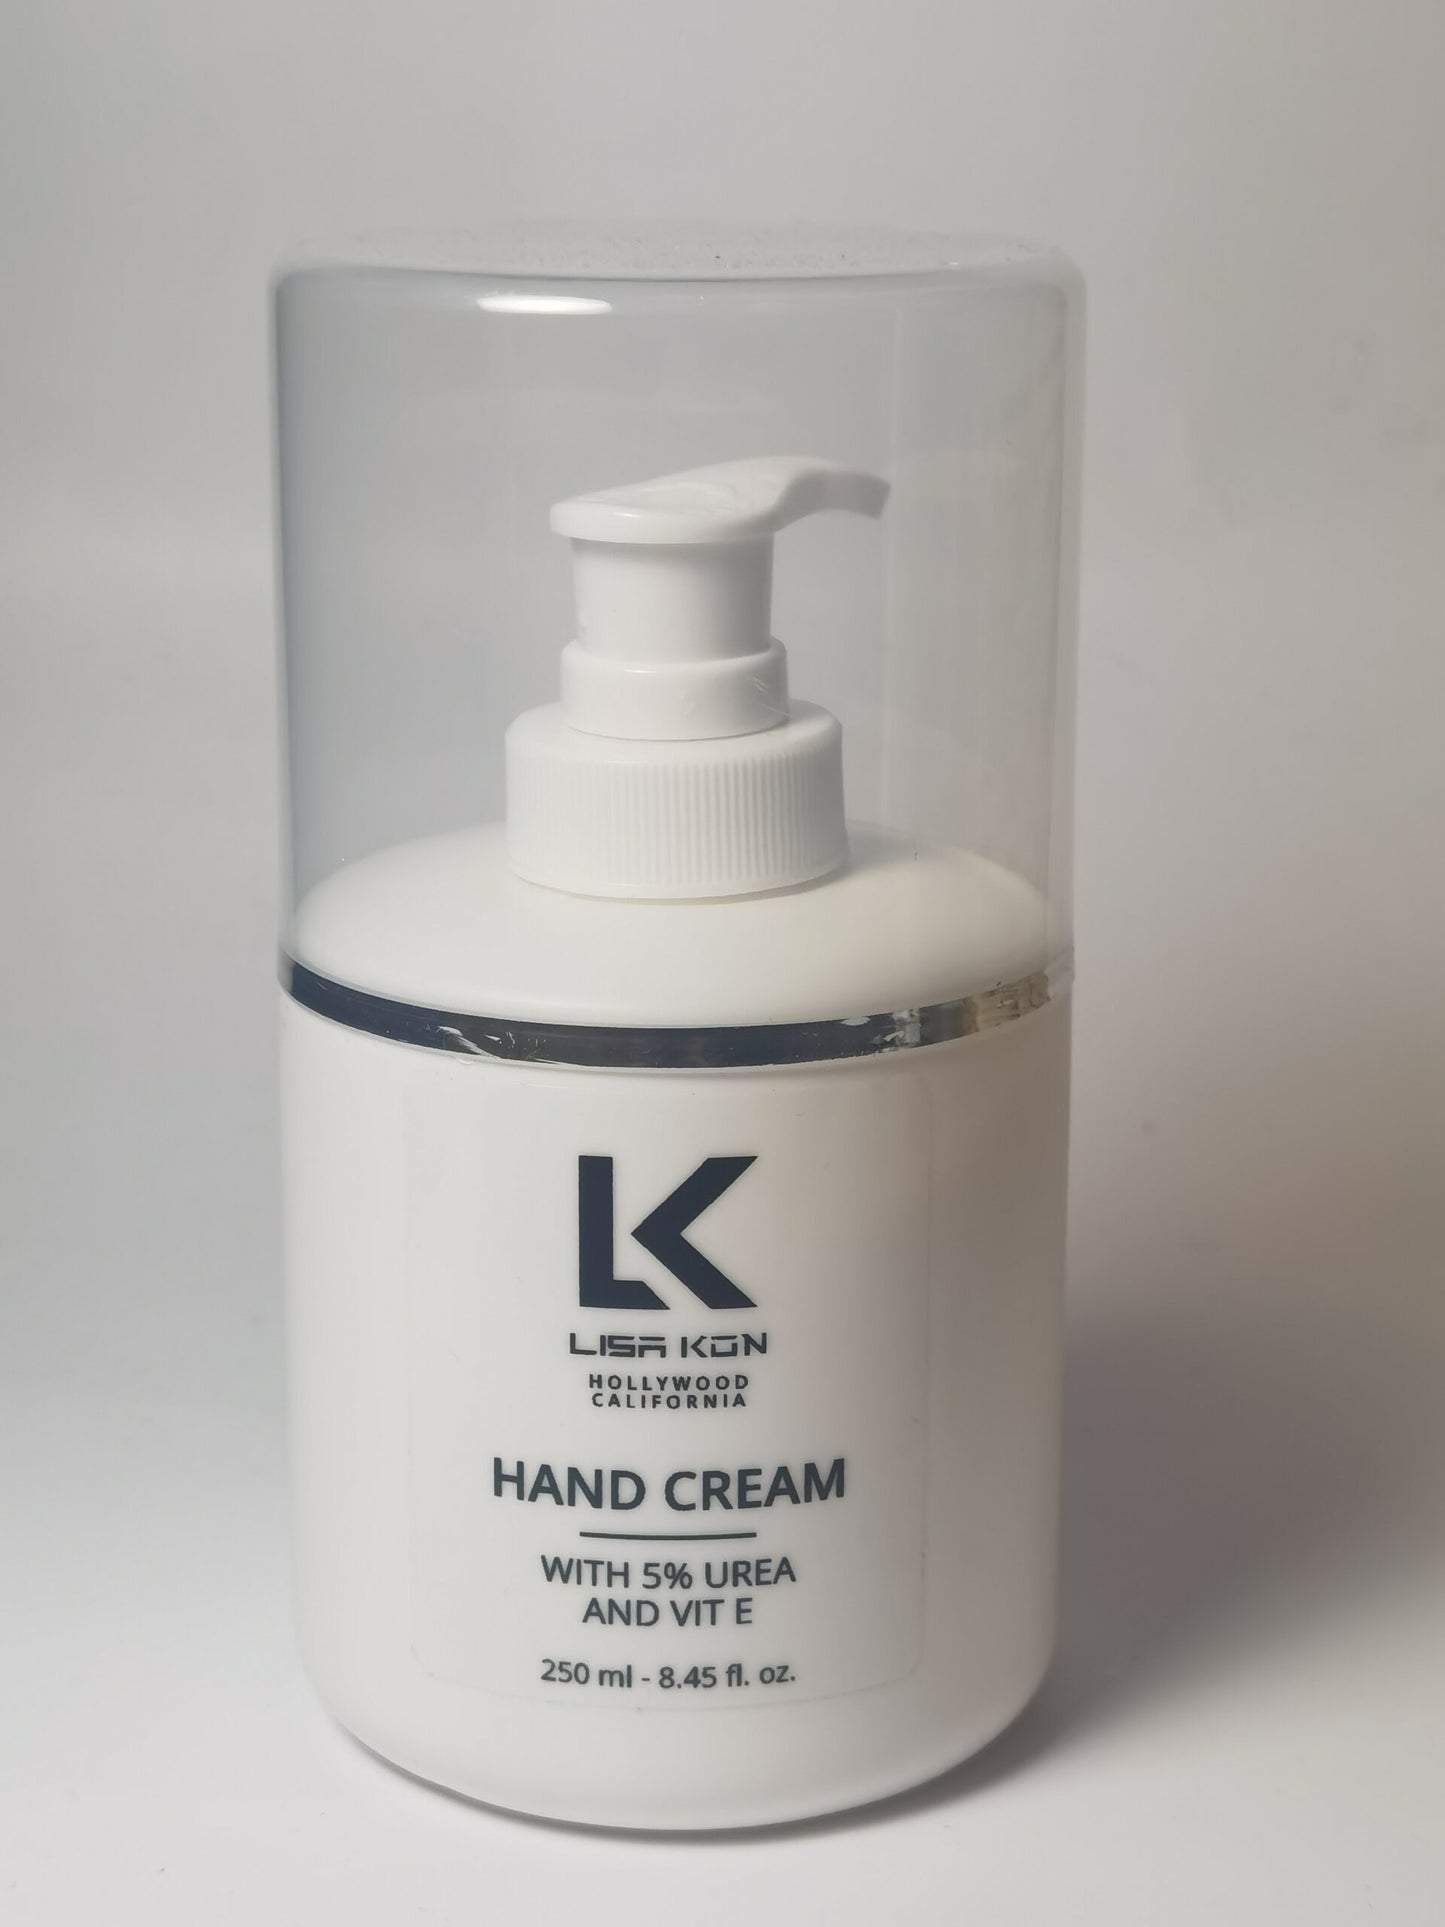 Lisa Kon – Hand Cream Celebrity Choice 3 options for You!